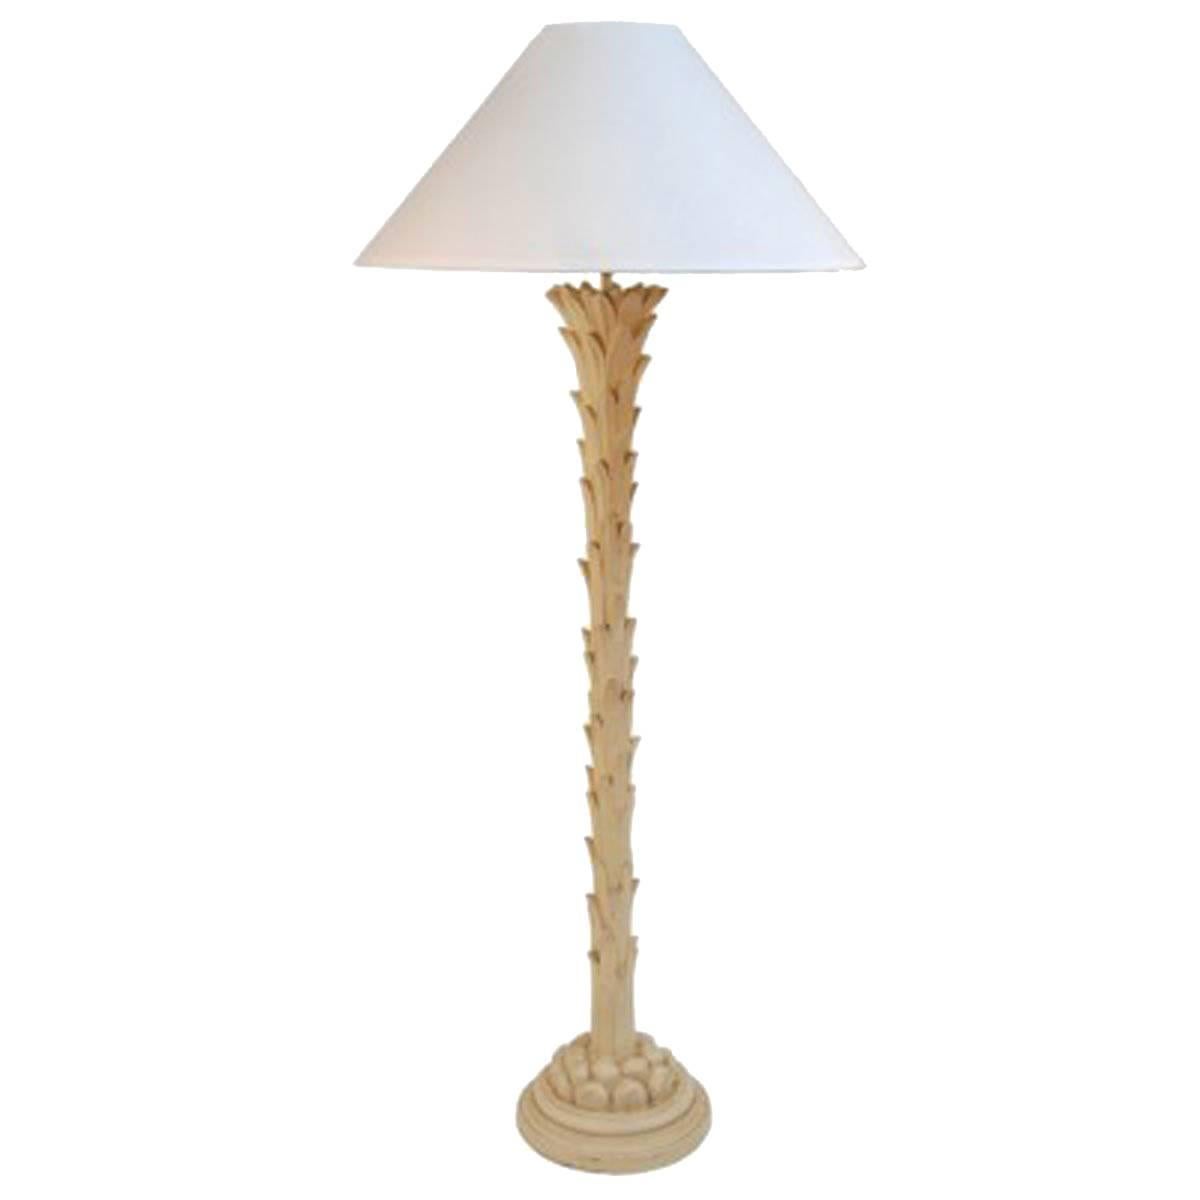 Chapman Serge Roche Style Palm Tree Floor Lamp **Saturday Sale**